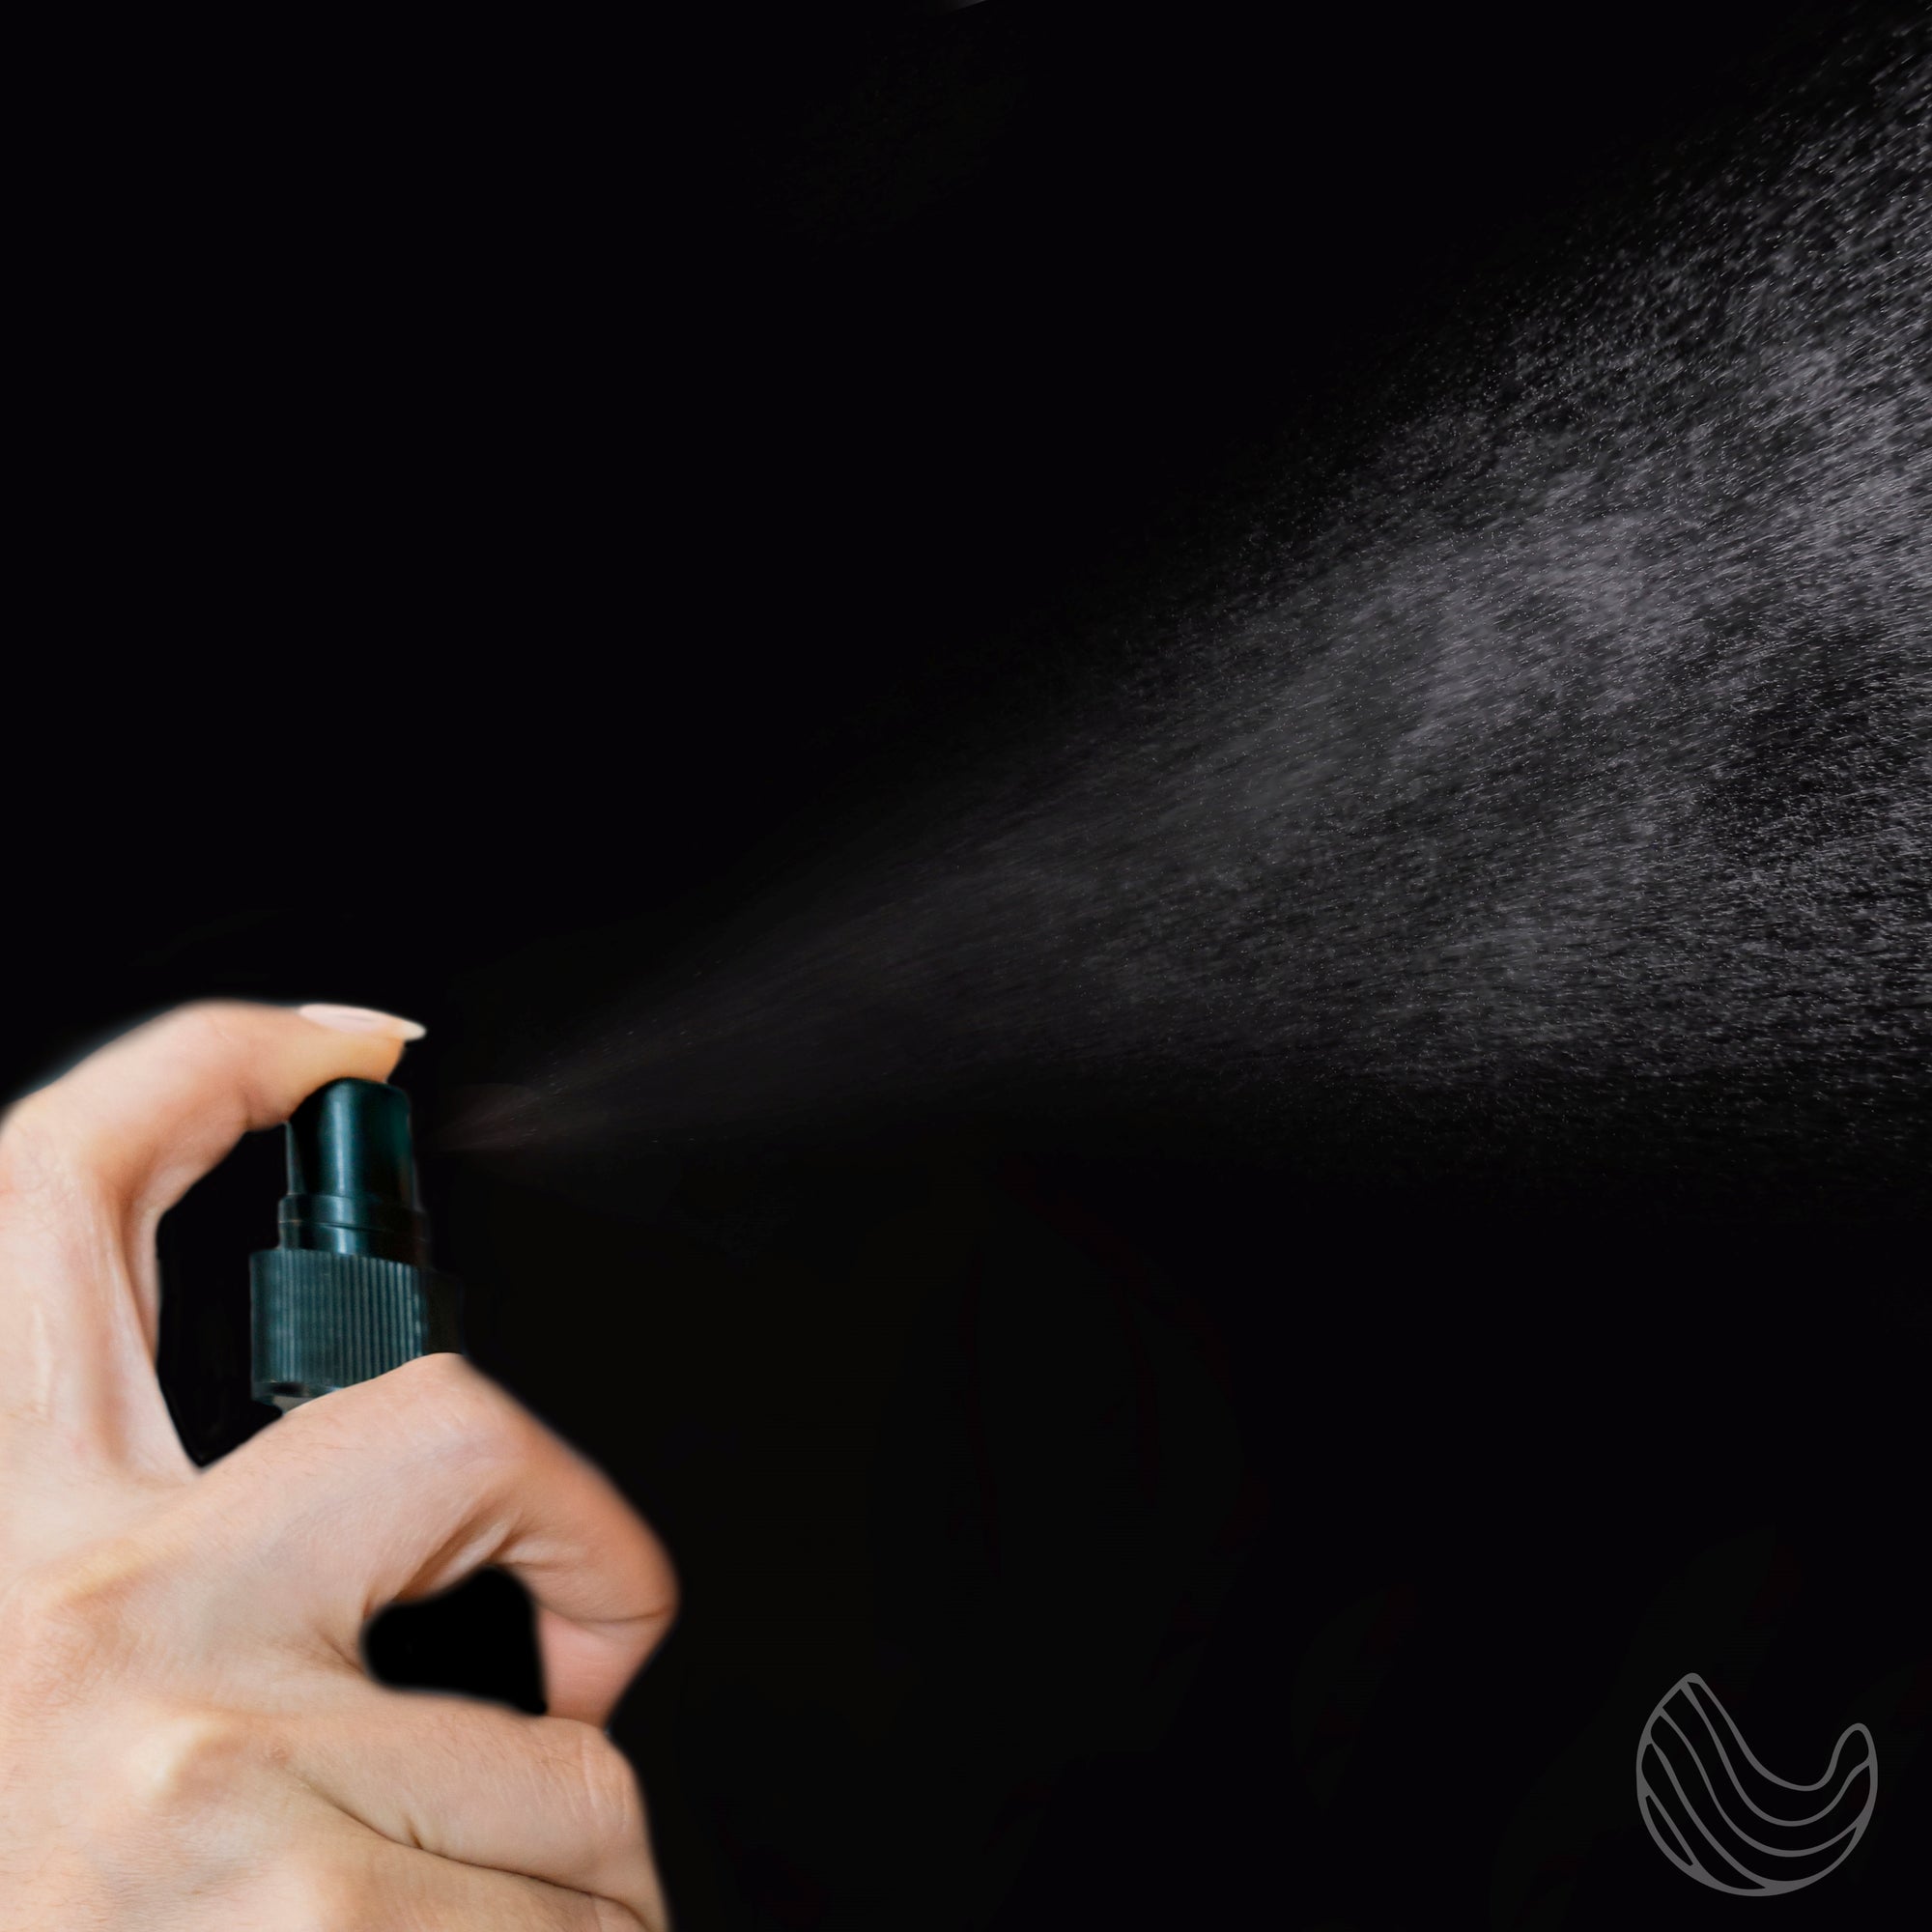 shower spray eucalyptus oil with a whiff of Cedarwood